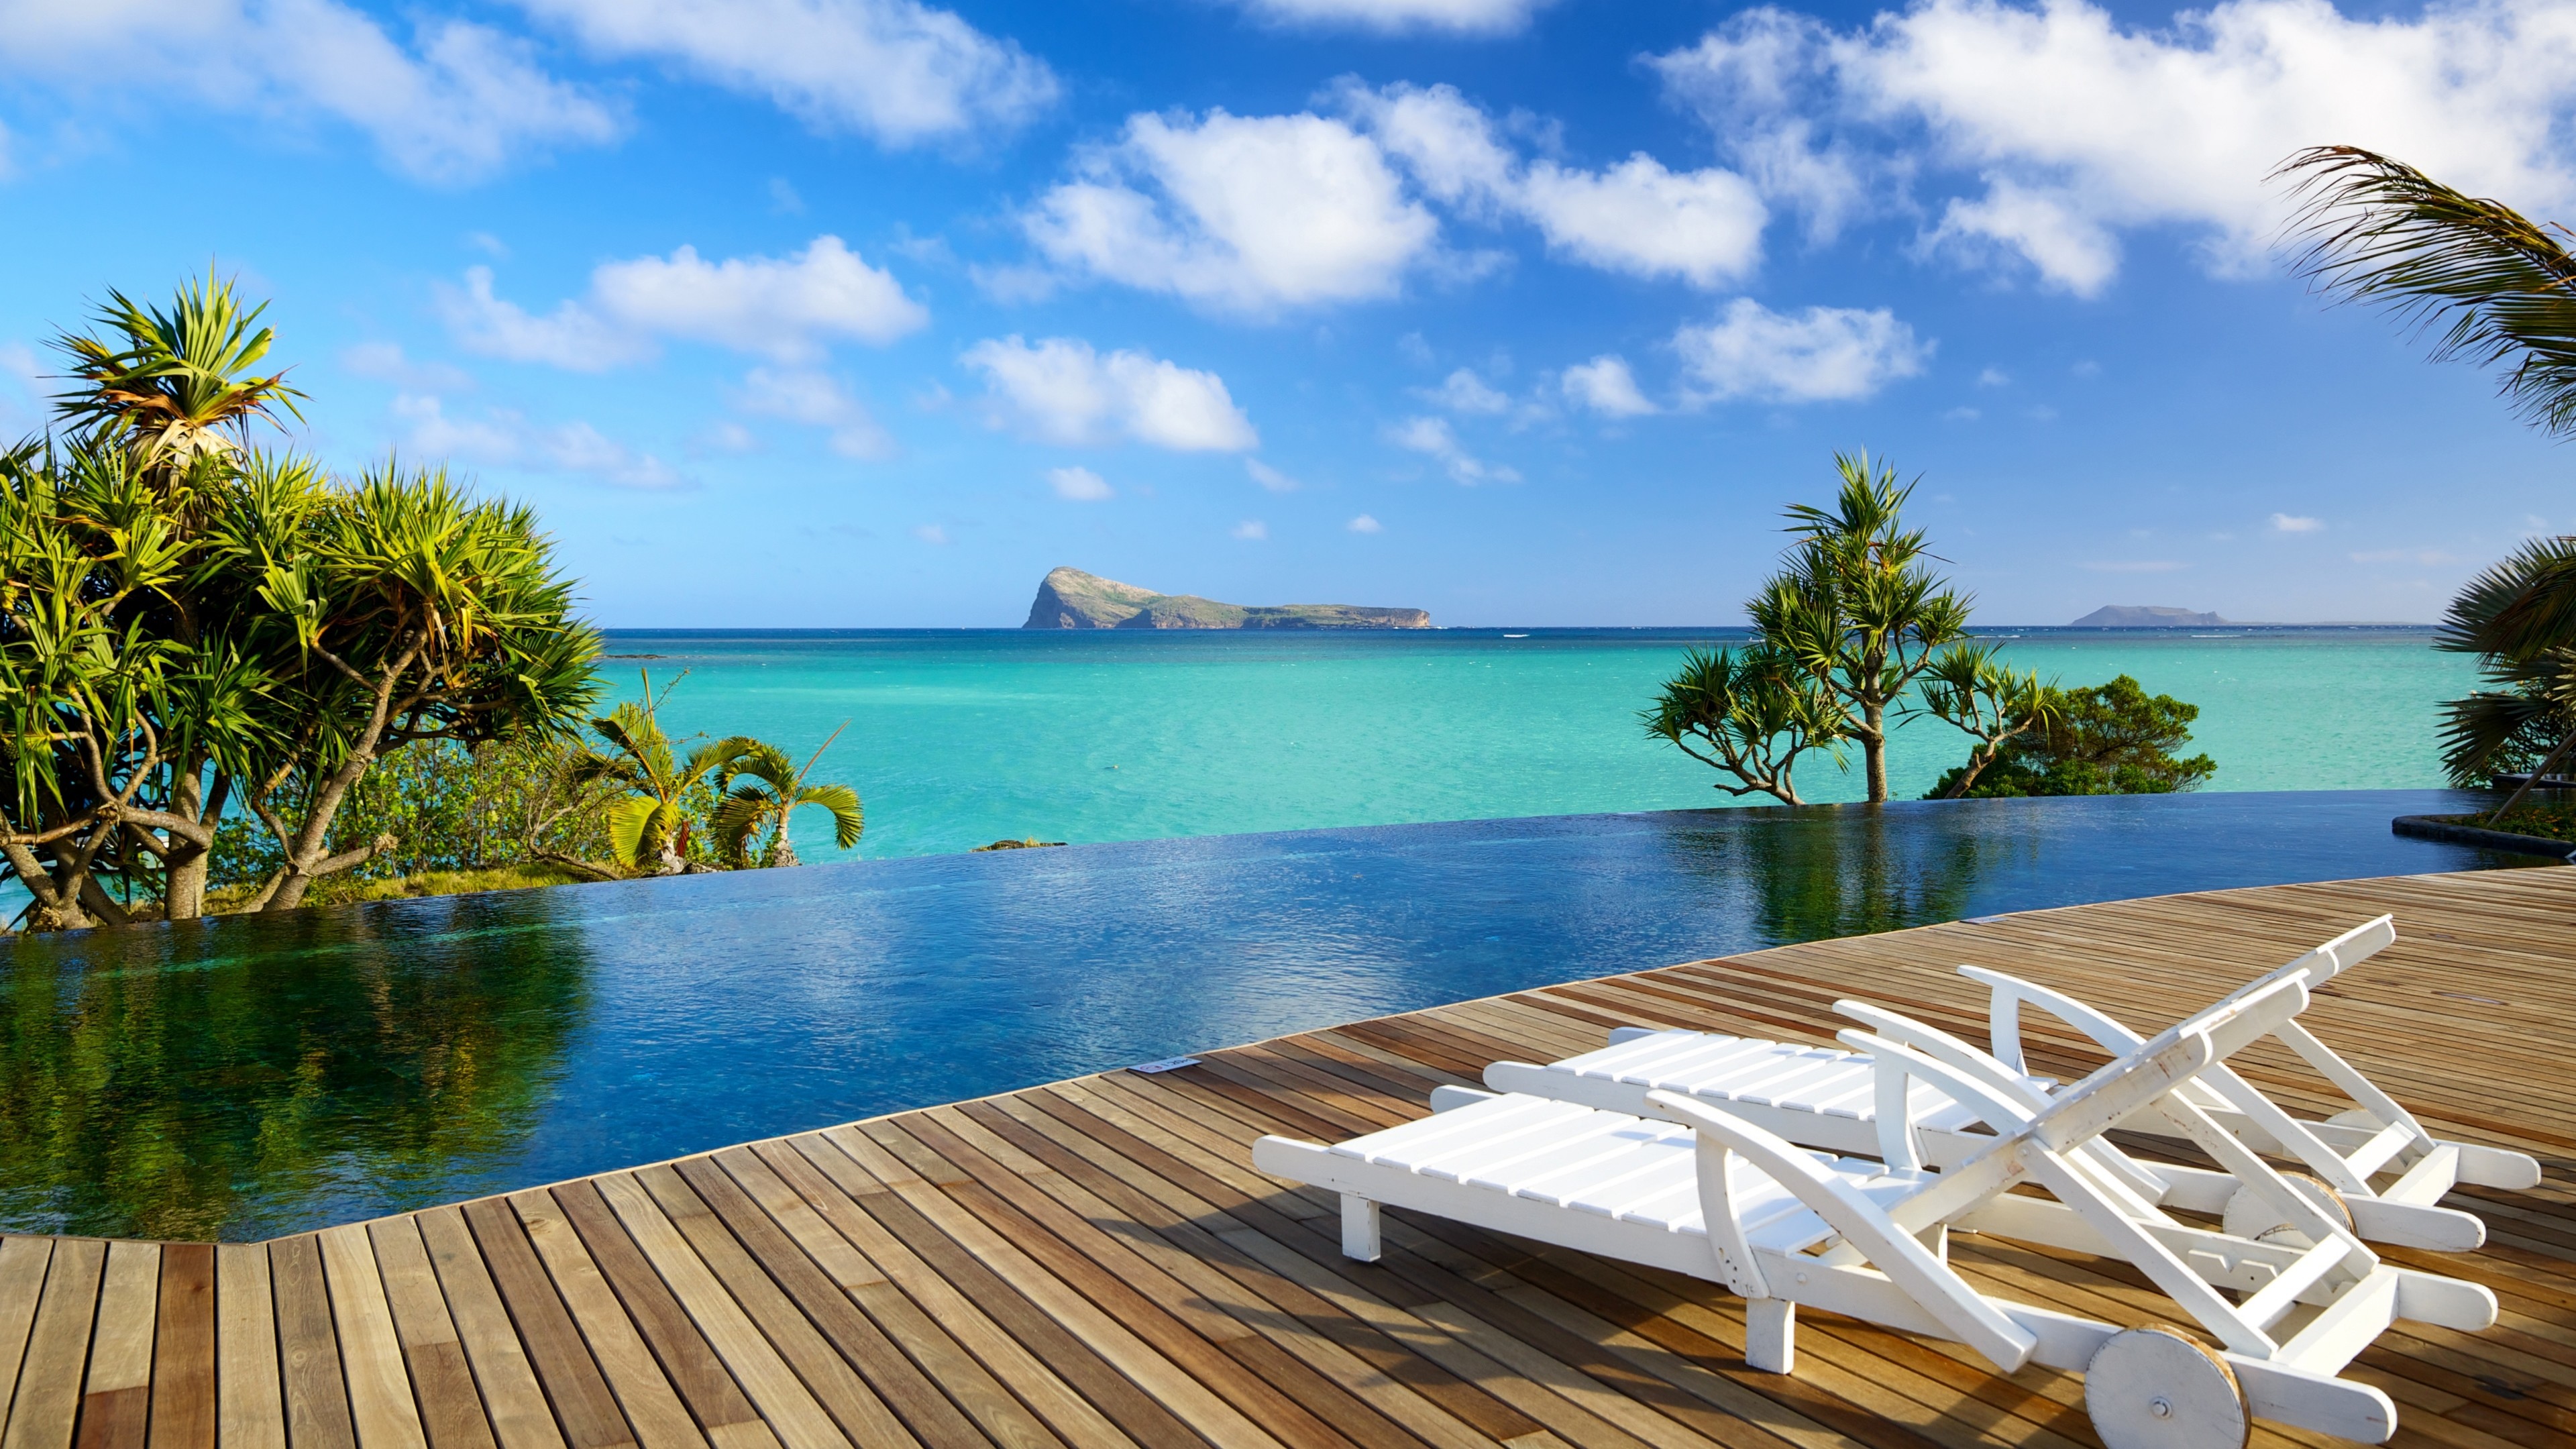 50 Relaxing for Desktop  Android iPhone Desktop HD Backgrounds   Wallpapers 1080p 4k